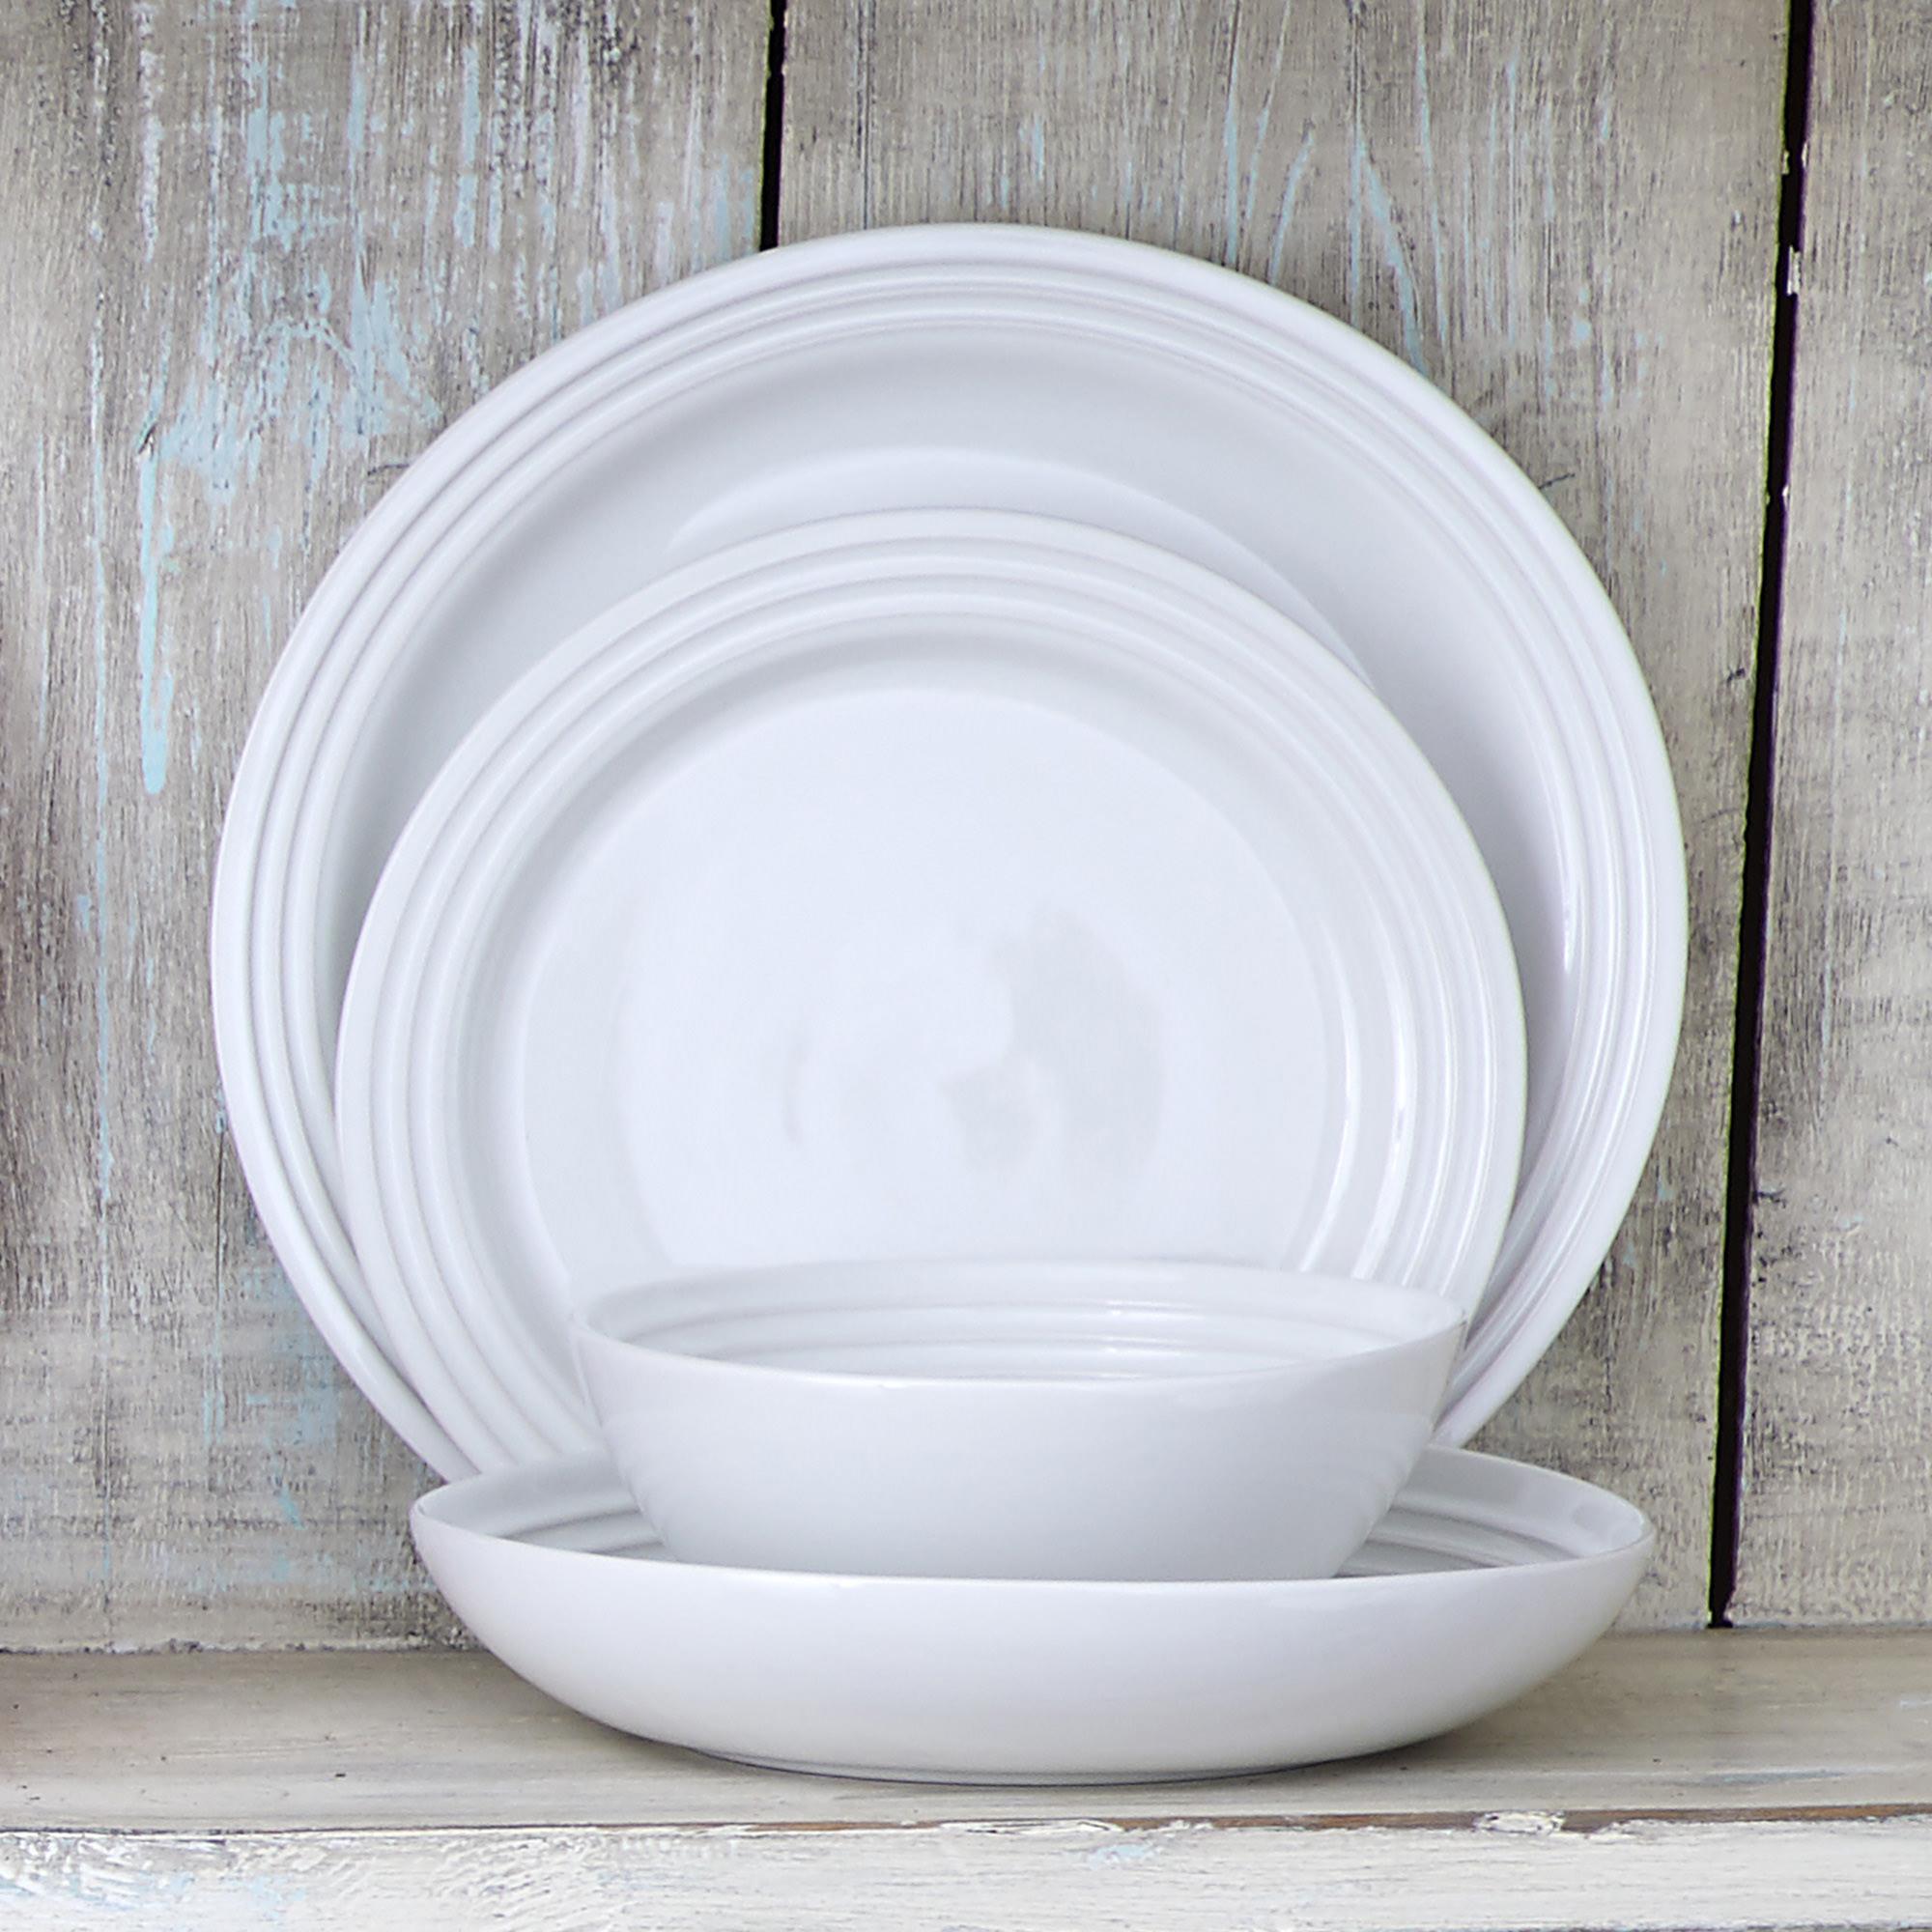 Le Creuset Stoneware Pasta Bowl Set of 4 White Image 5